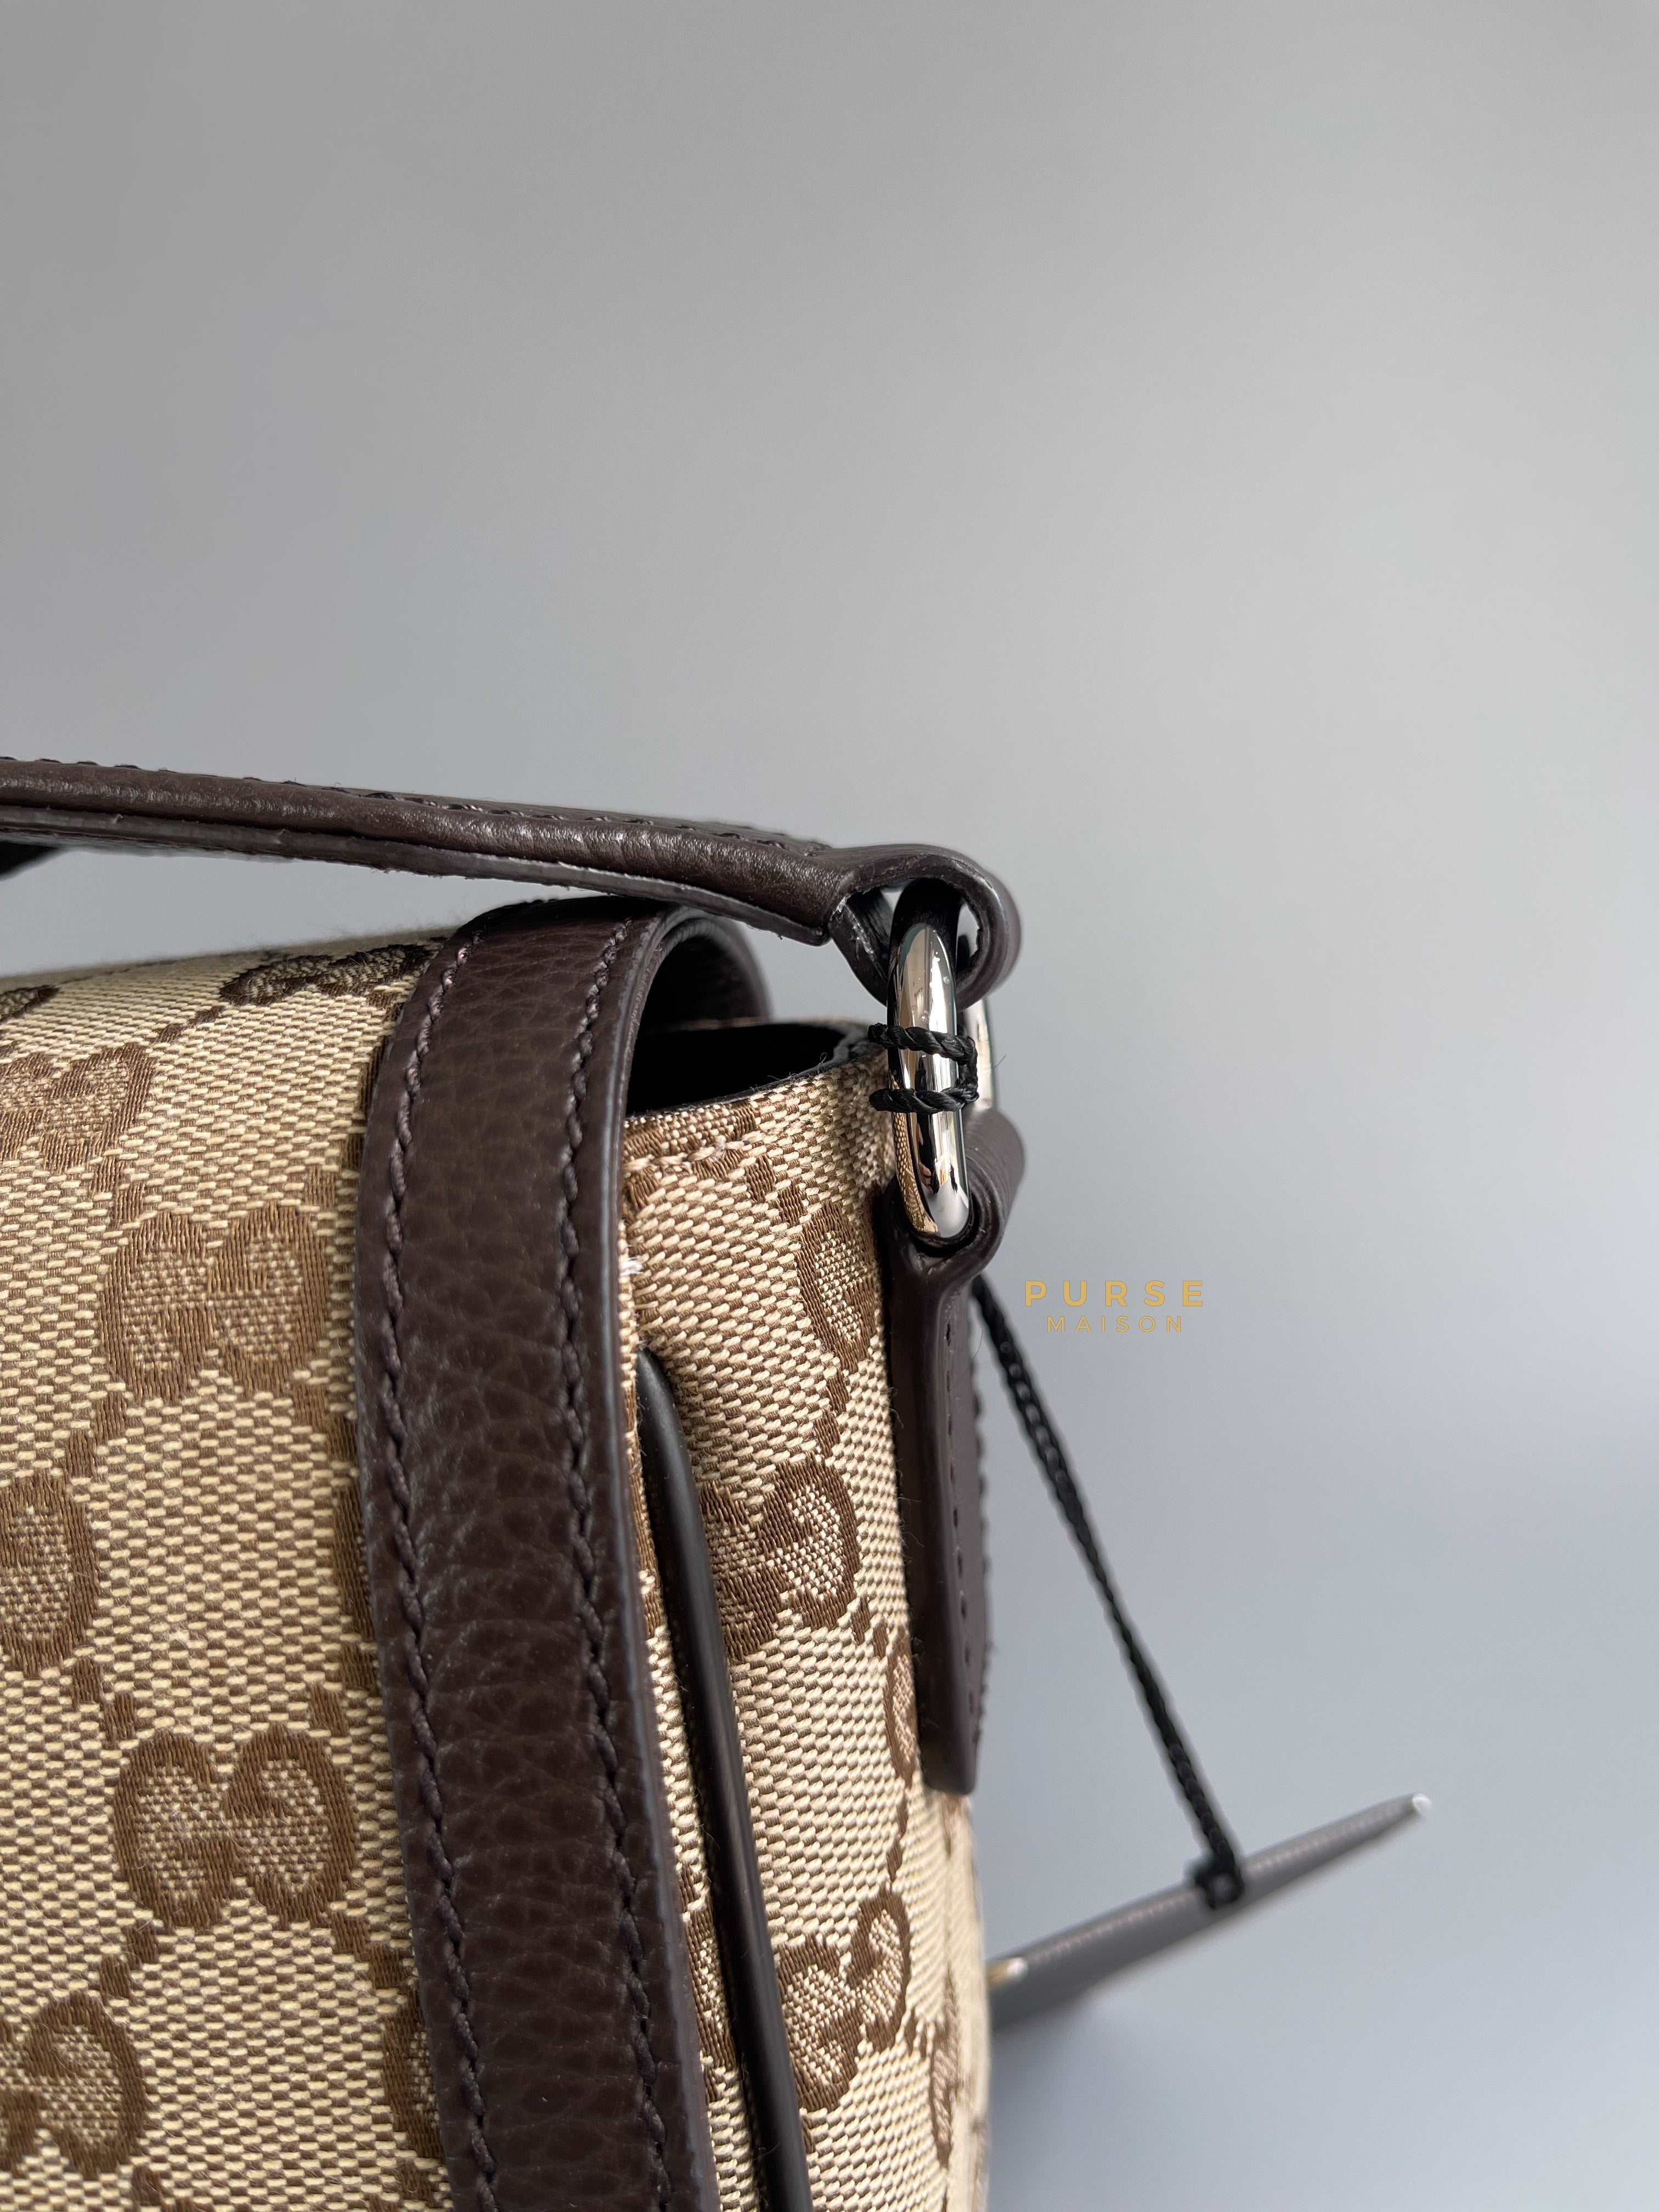 Gucci GG Beige Brown Guccissima Messenger Bag | Purse Maison Luxury Bags Shop